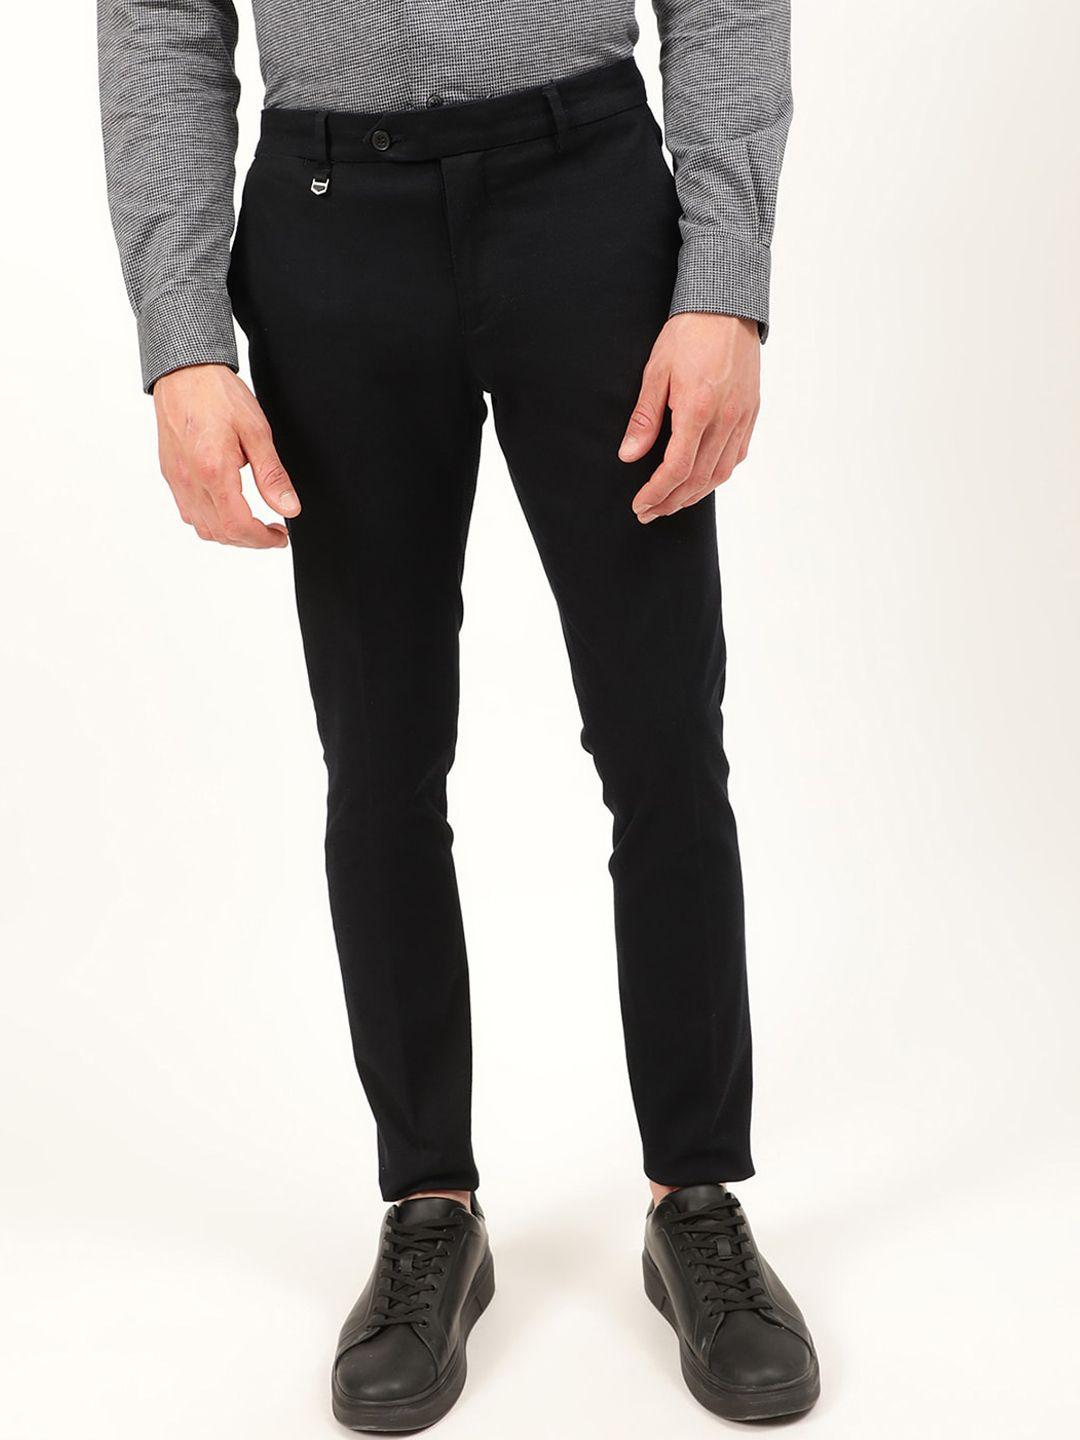 antony-morato-men-black-skinny-fit-chinos-trousers